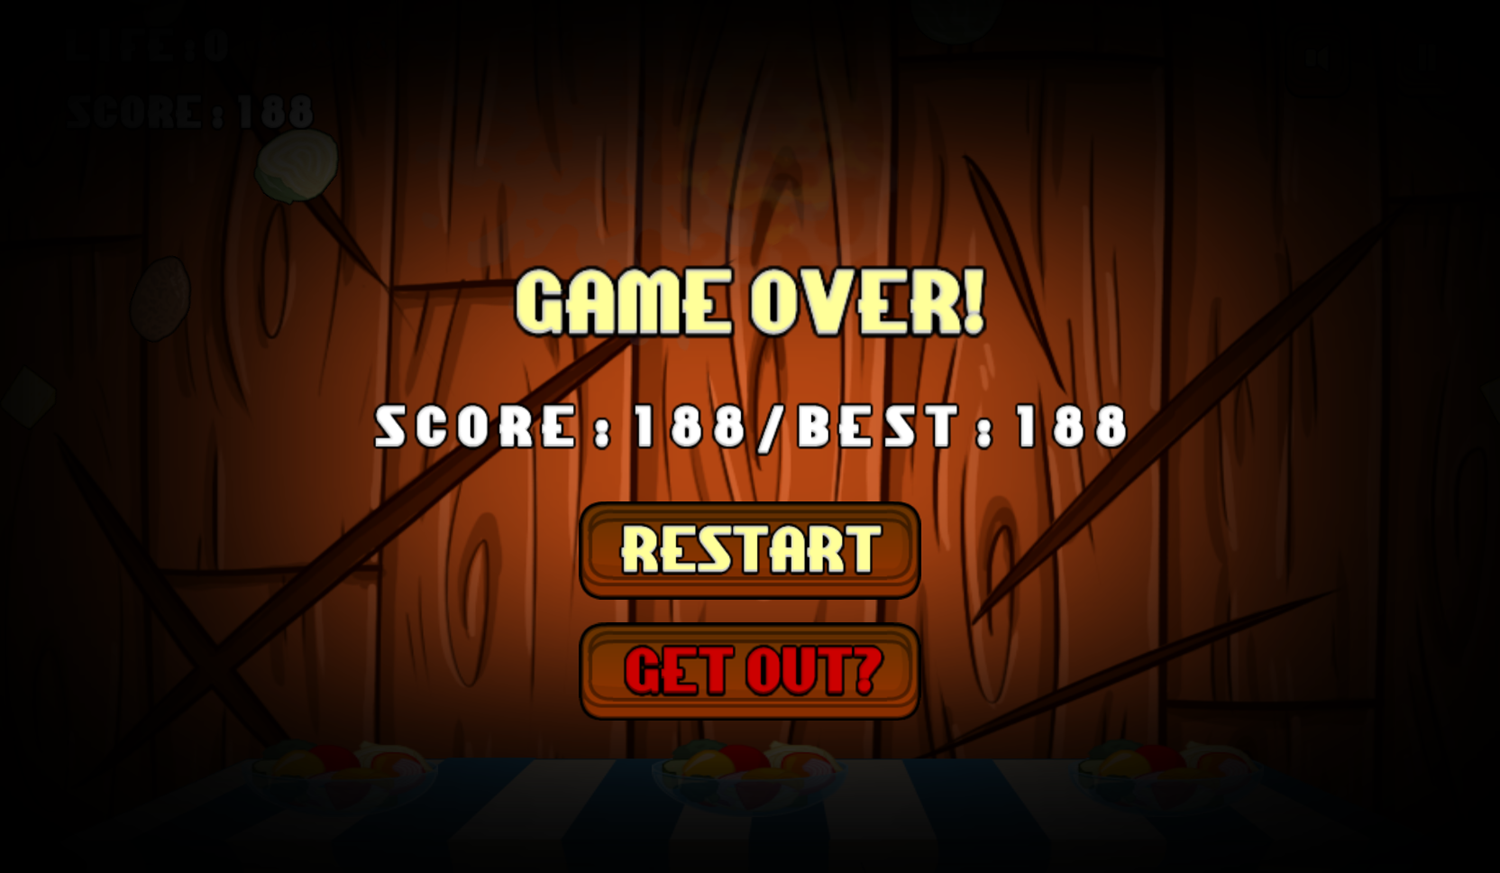 Fast Fruit Game Over Screenshot.